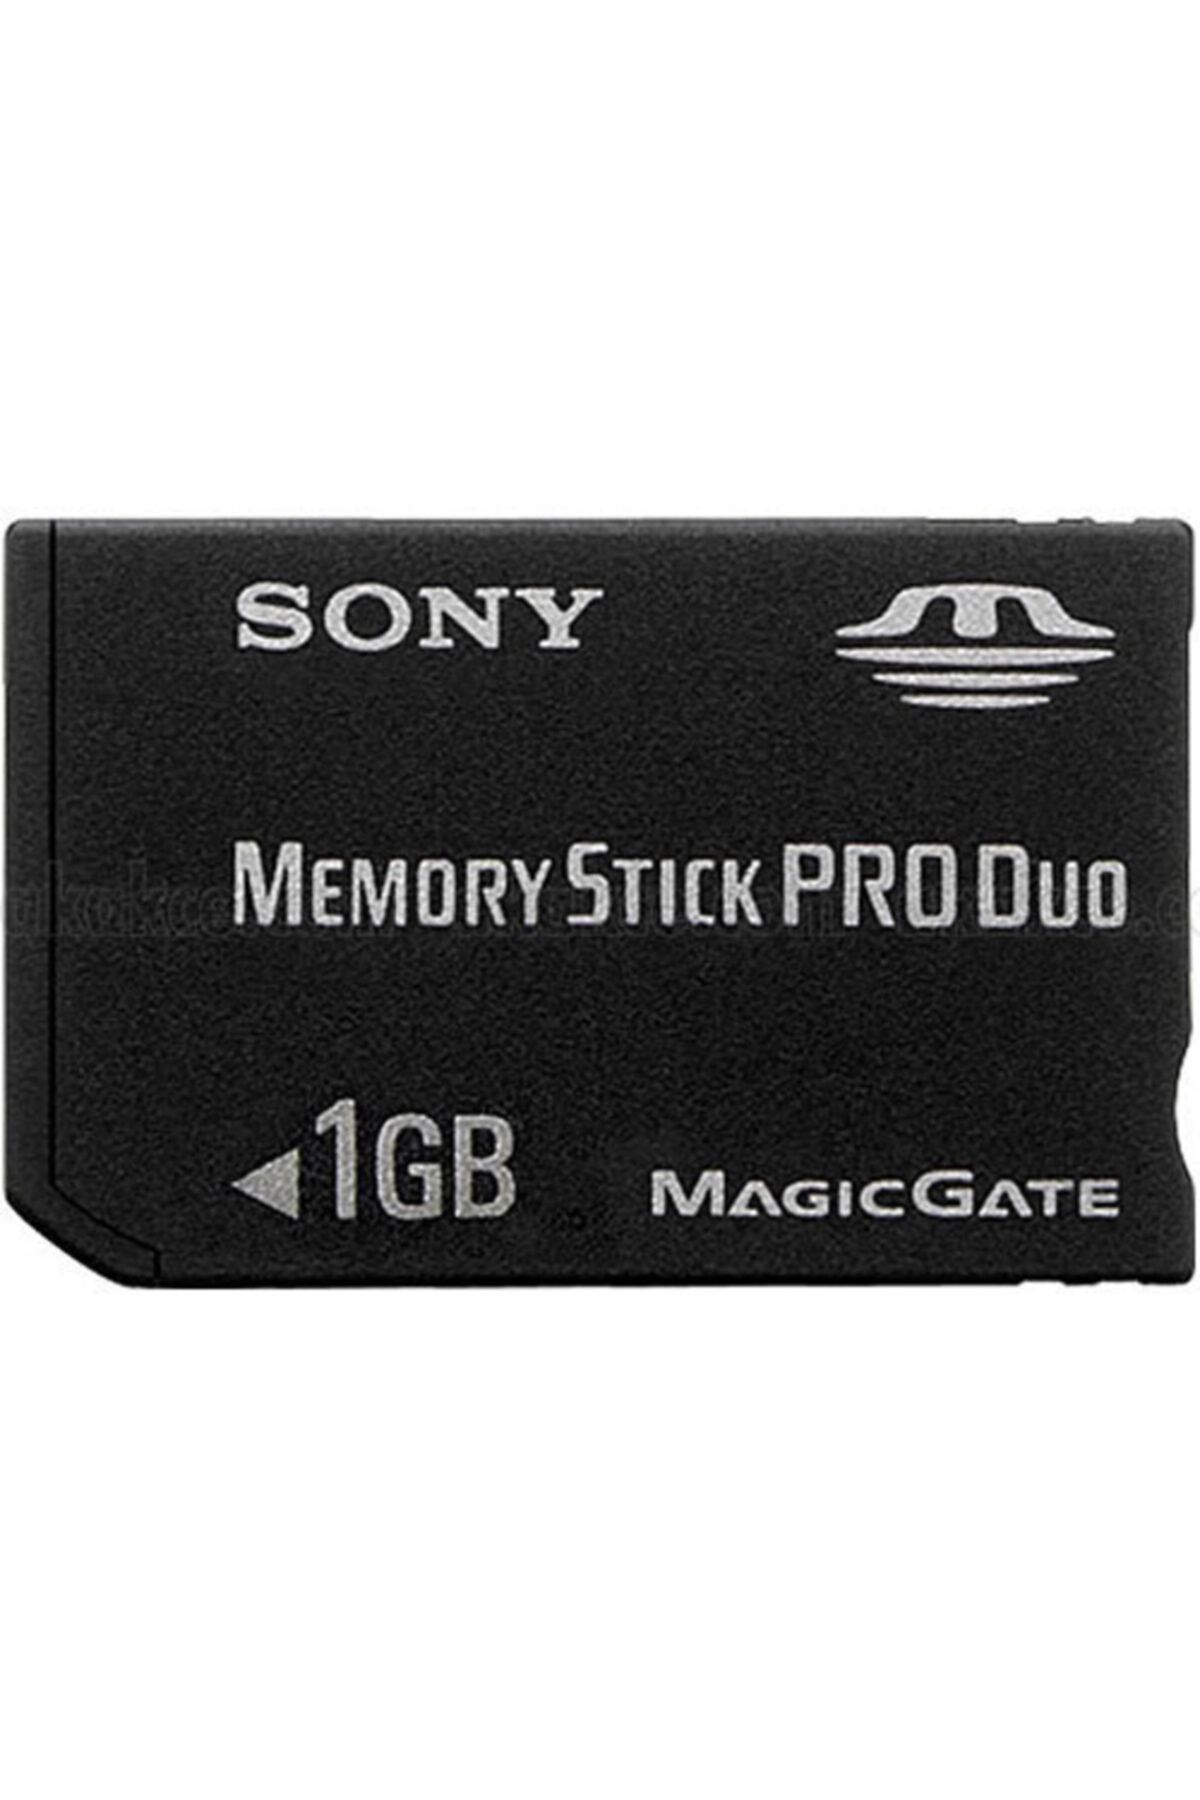 Sony Memory Stick Pro Duo 1 Gb